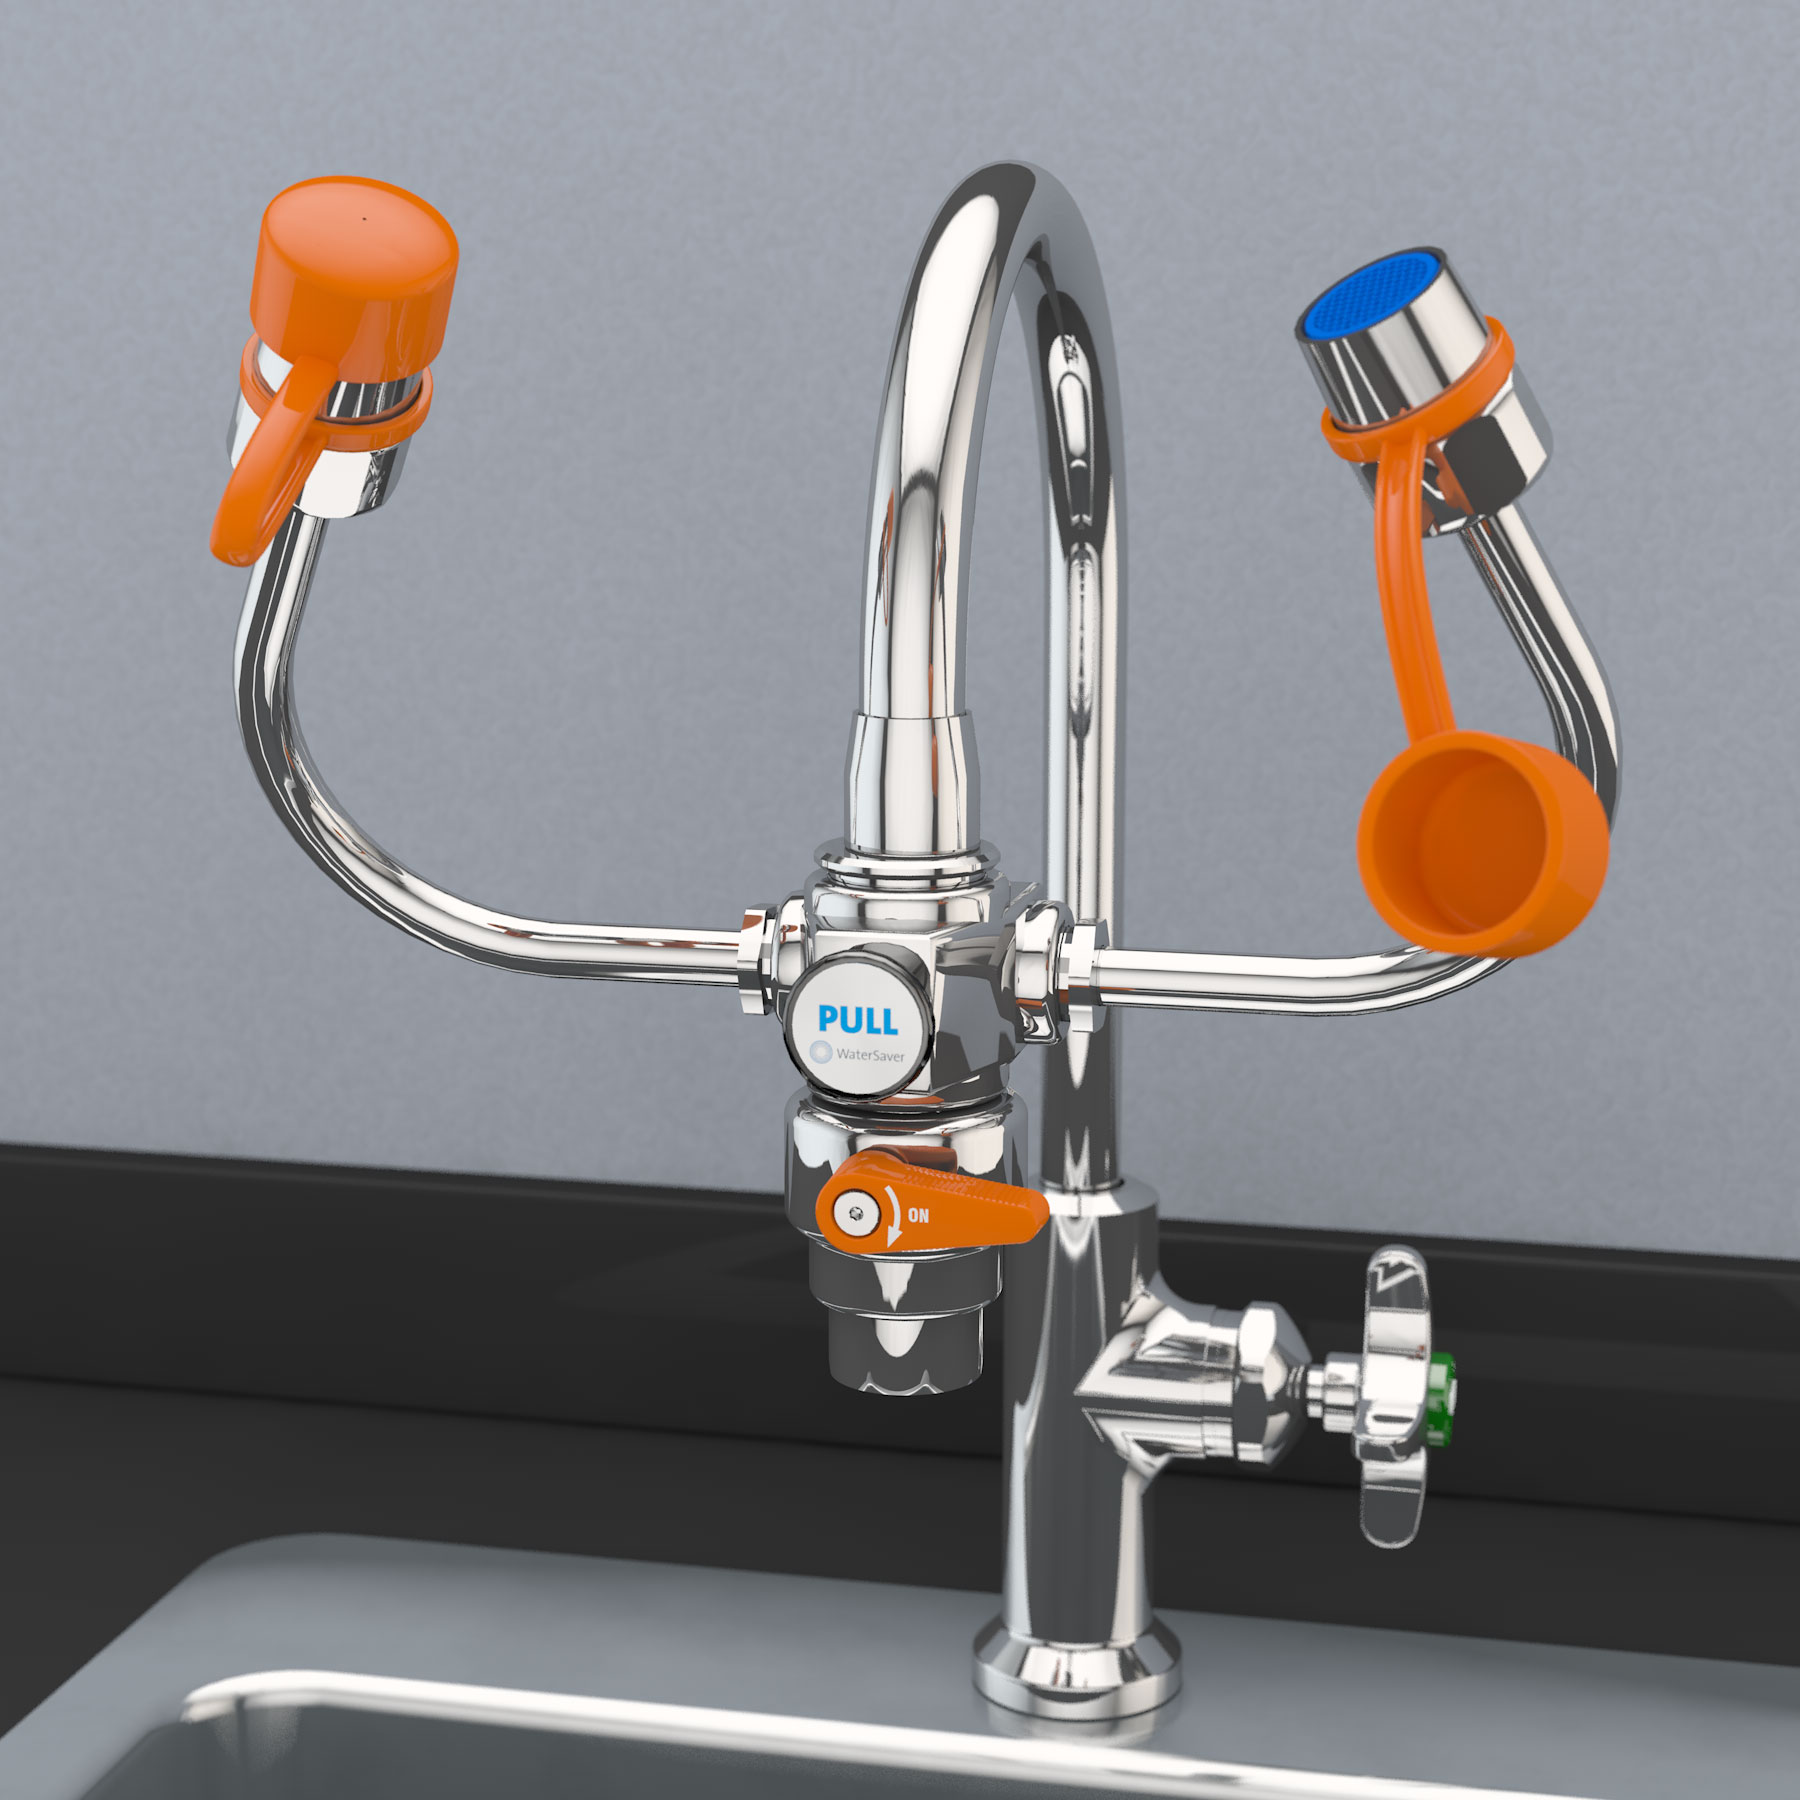 Ew201 Watersaver Faucet Co